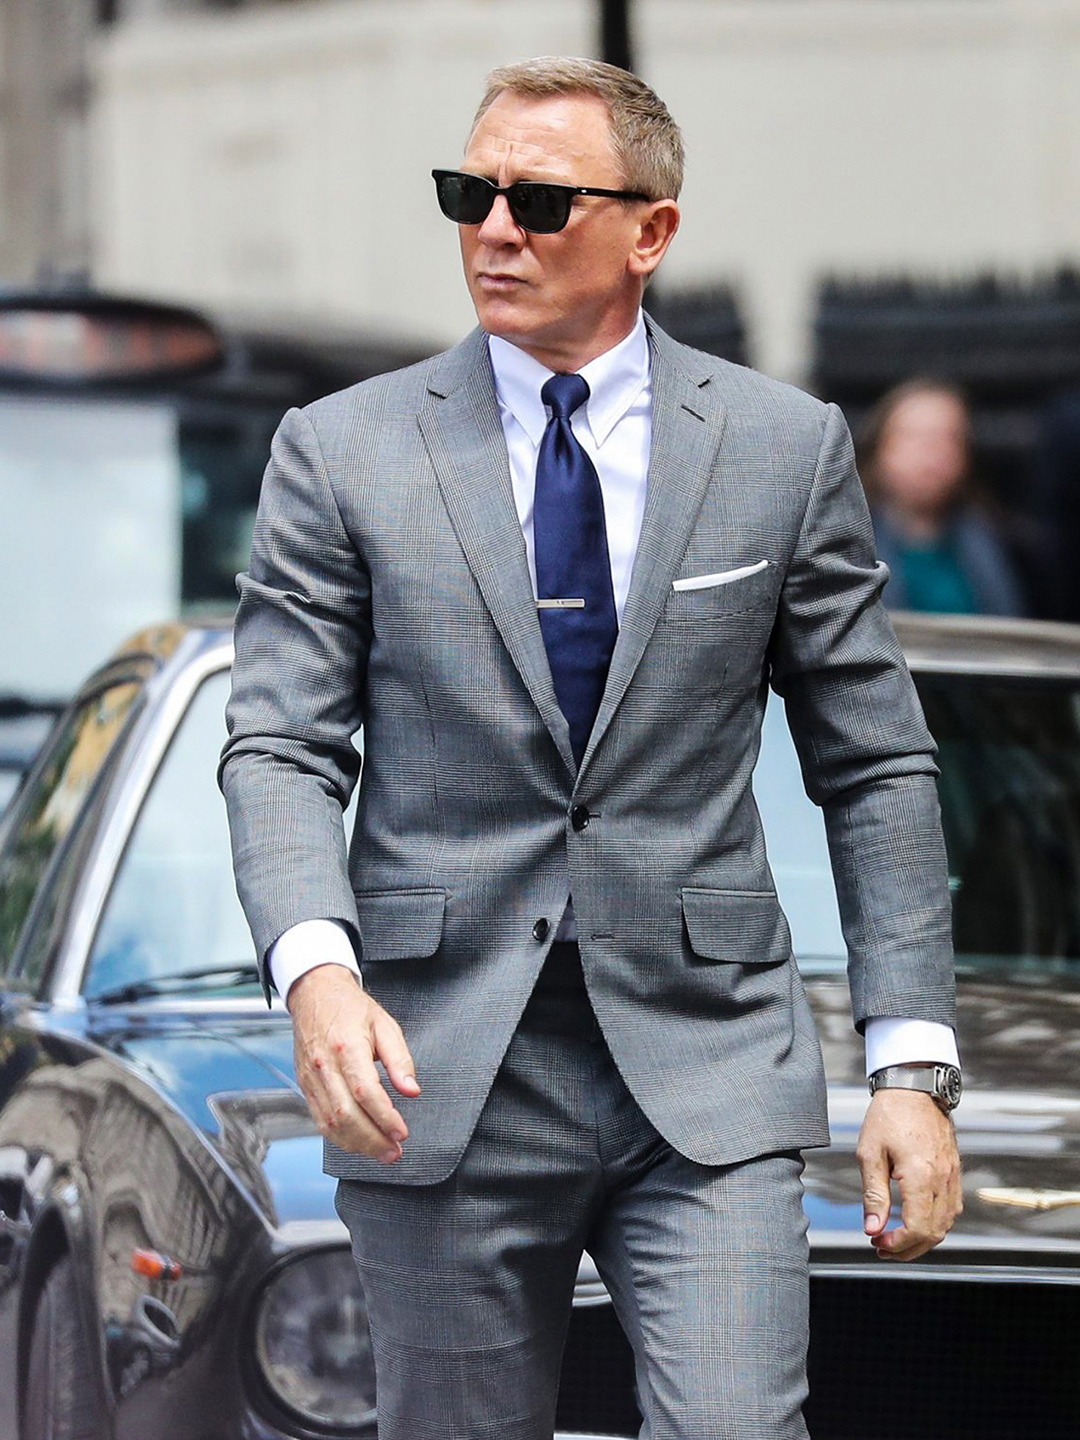 James Bond wearing a light-grey suit